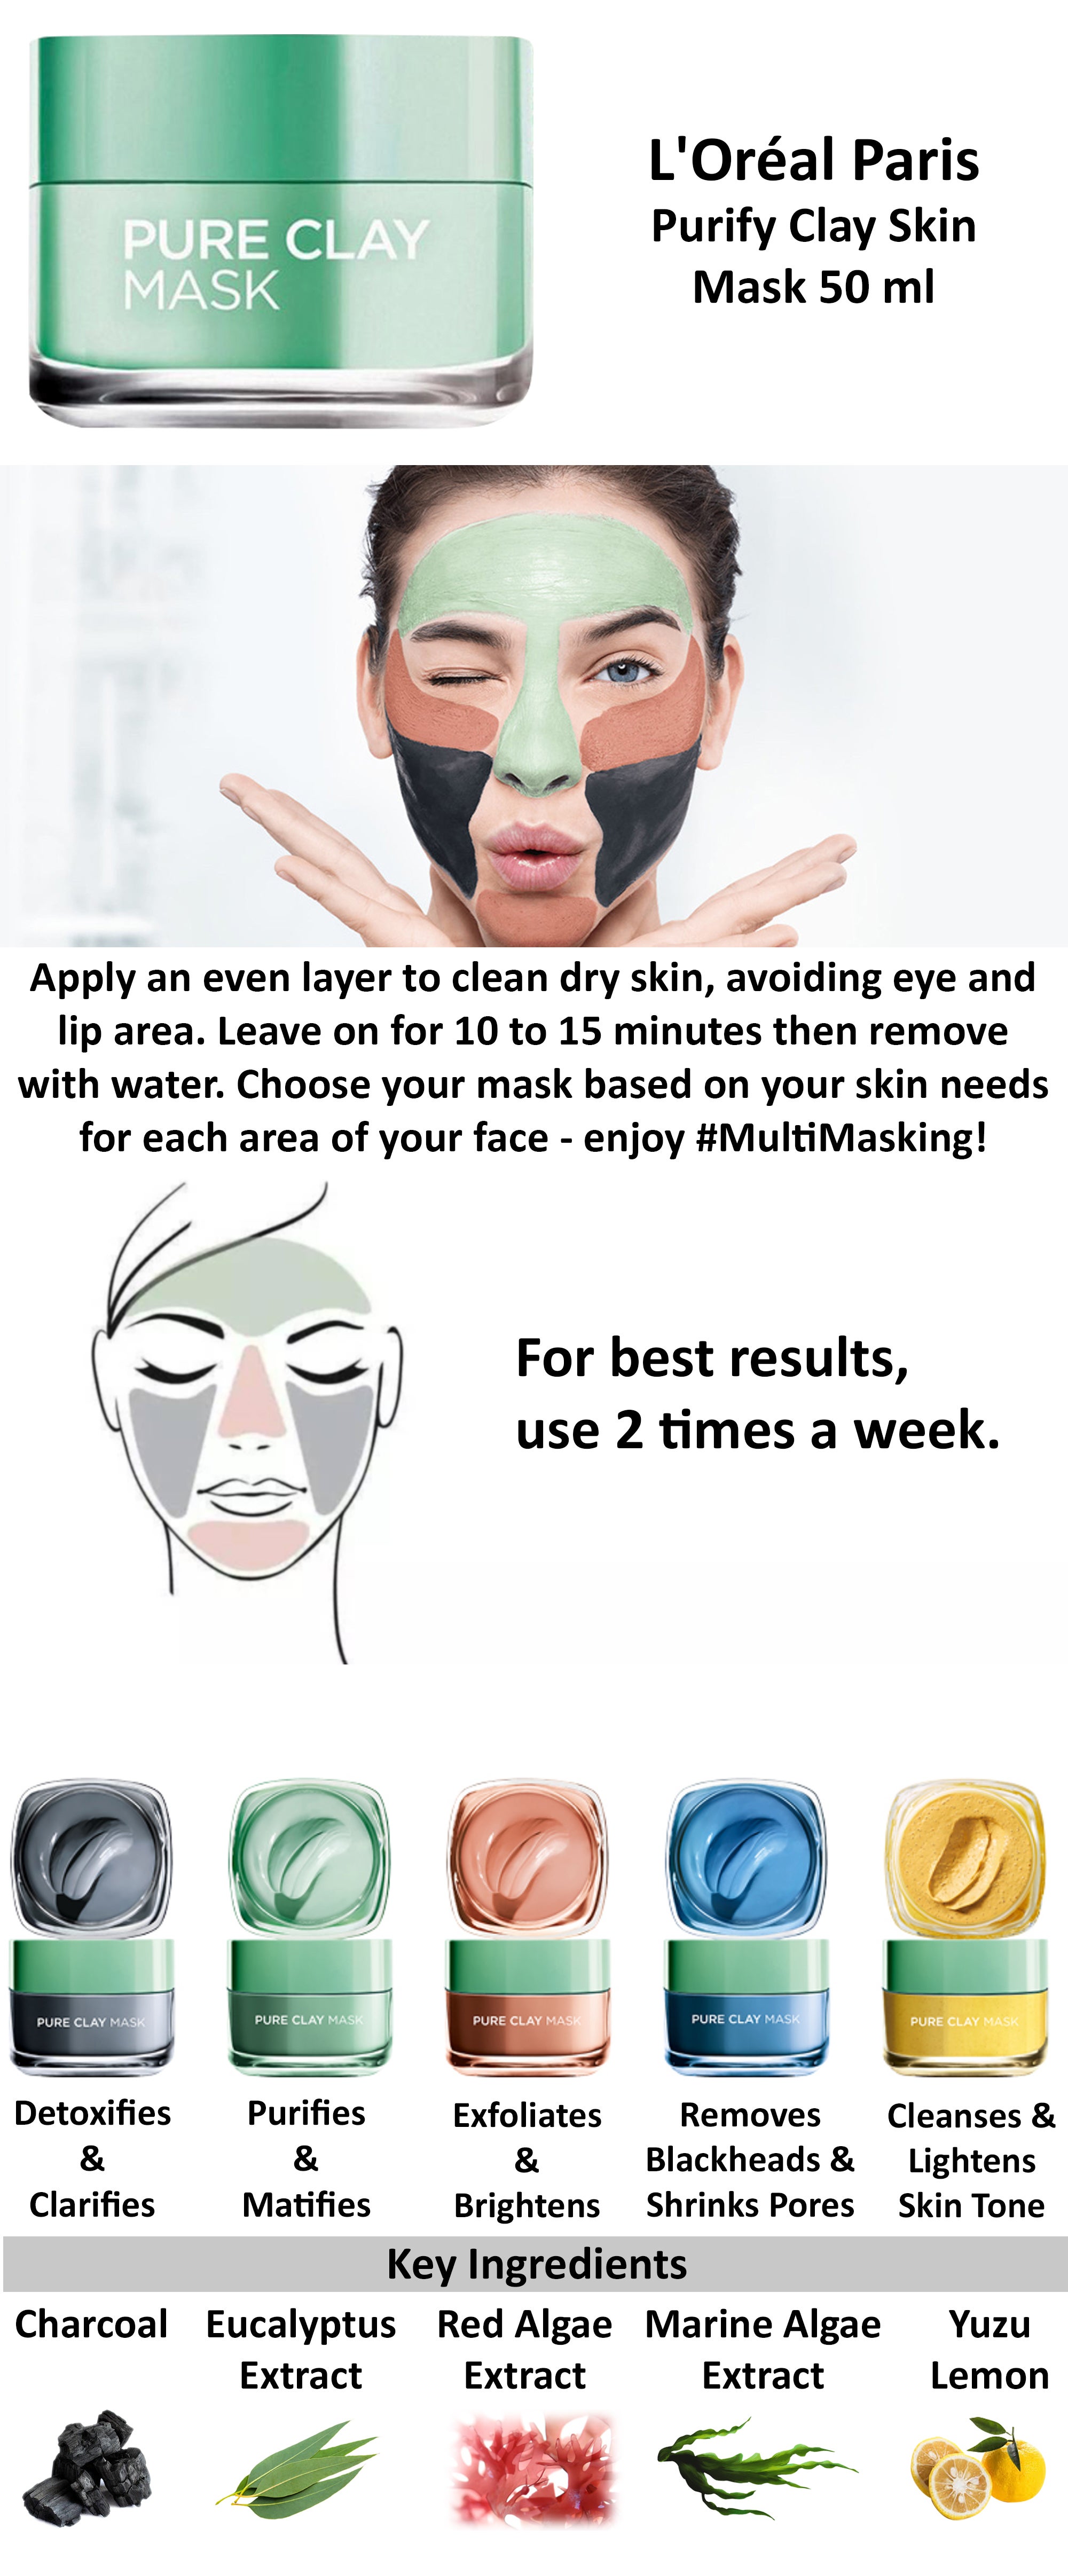 L'OREAL PARIS Clay Face Mask With Eucalyptus Purifies And Mattifies 50ml Egypt | Giza